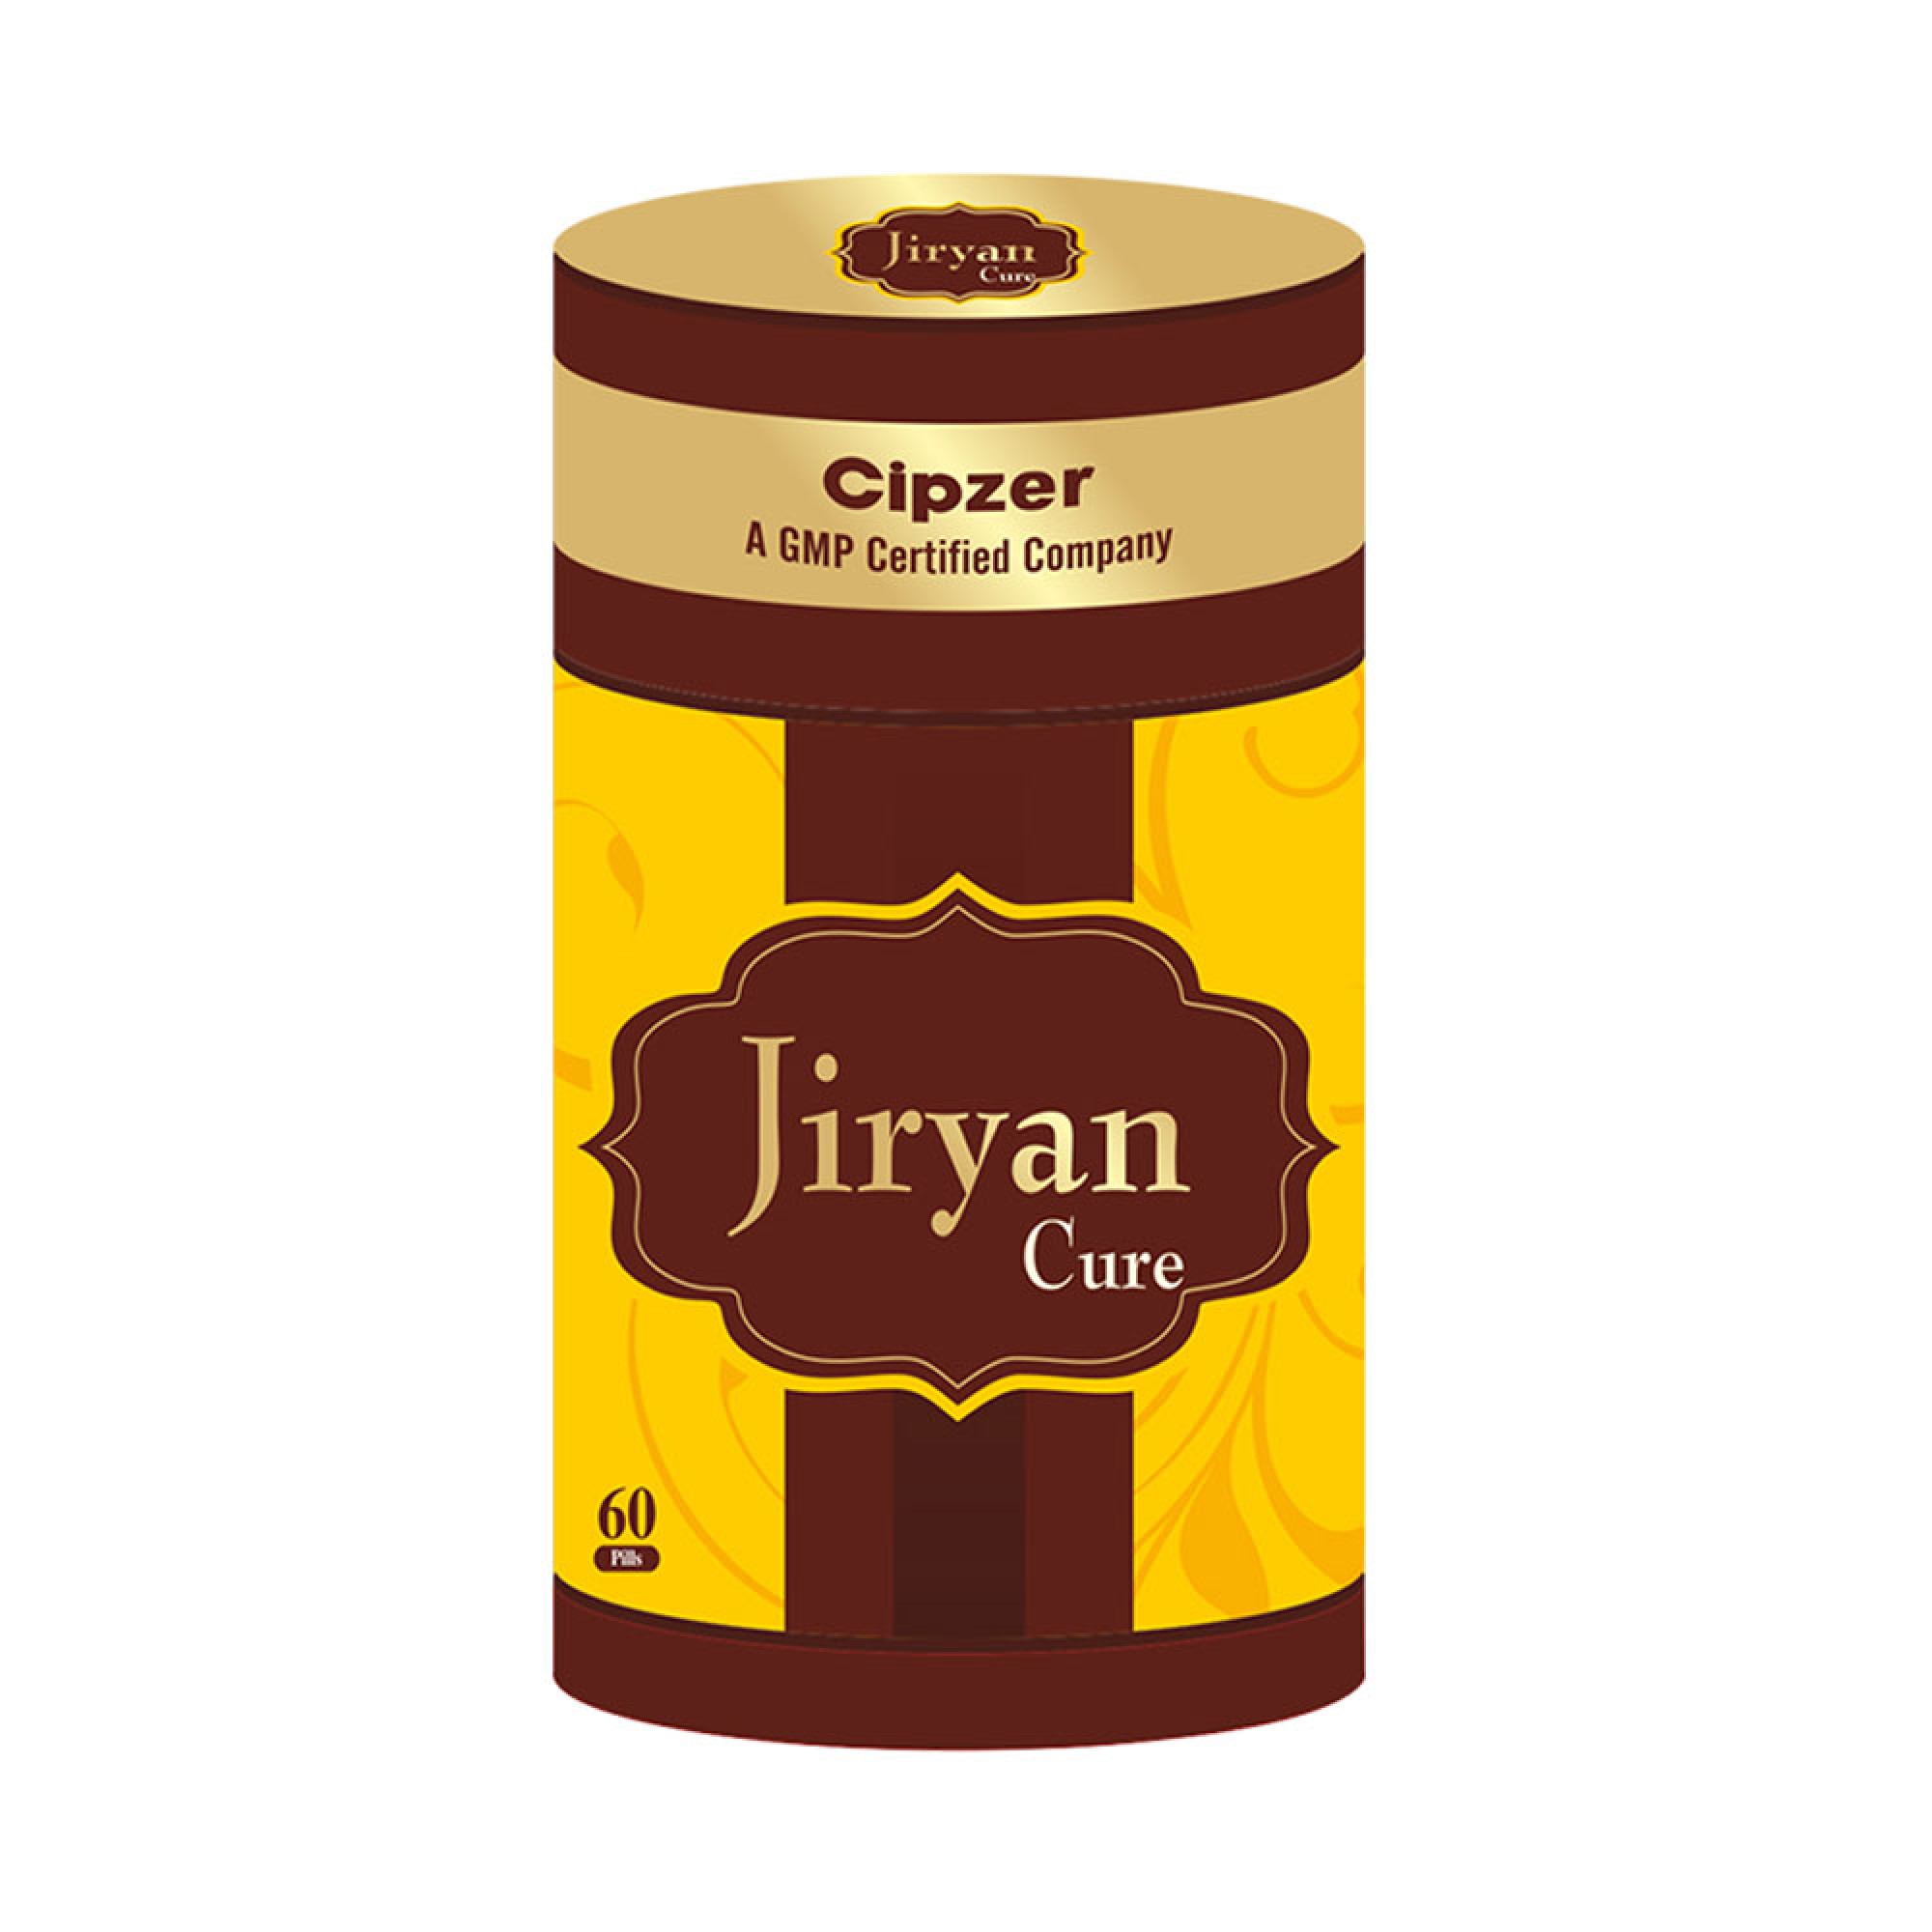 CIpzer Jiryan Cure 60 Pills